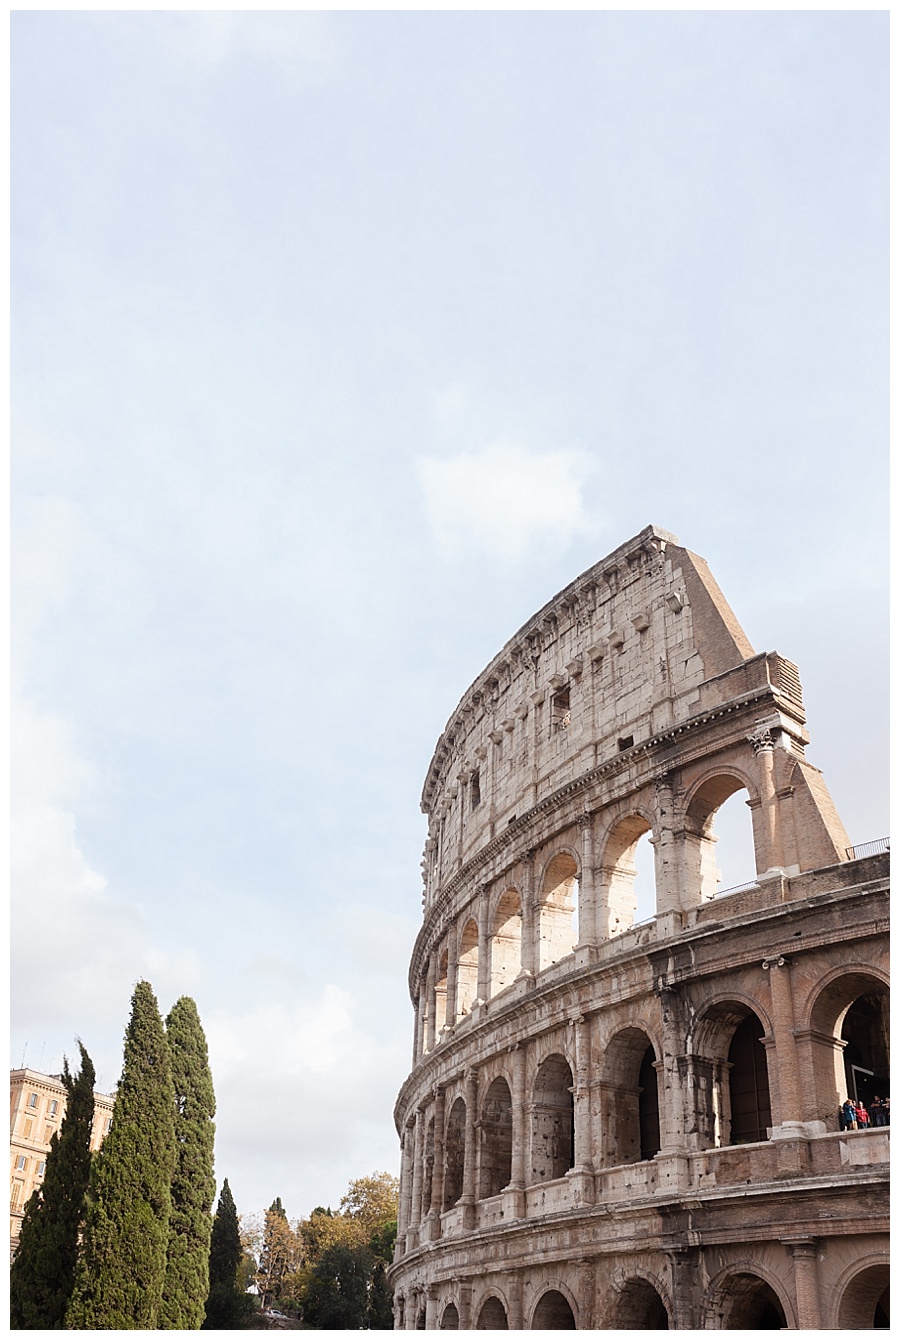 Rome, Coliseum, Italy